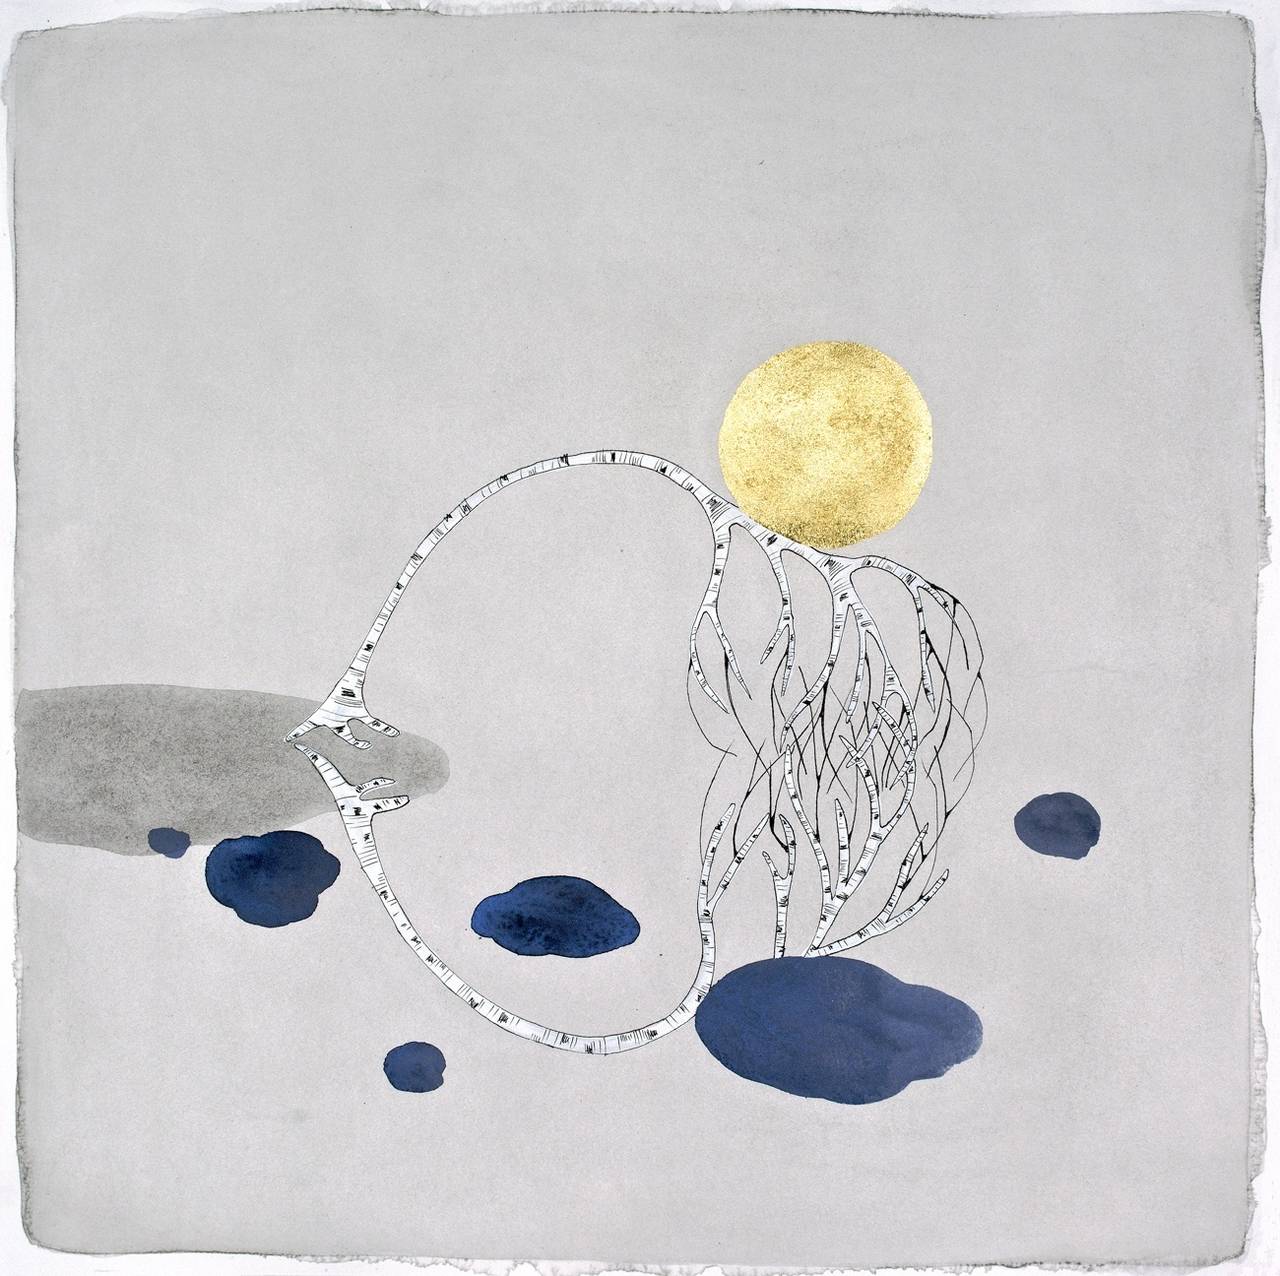 The Moon, "merge" - Art by Crystal Liu